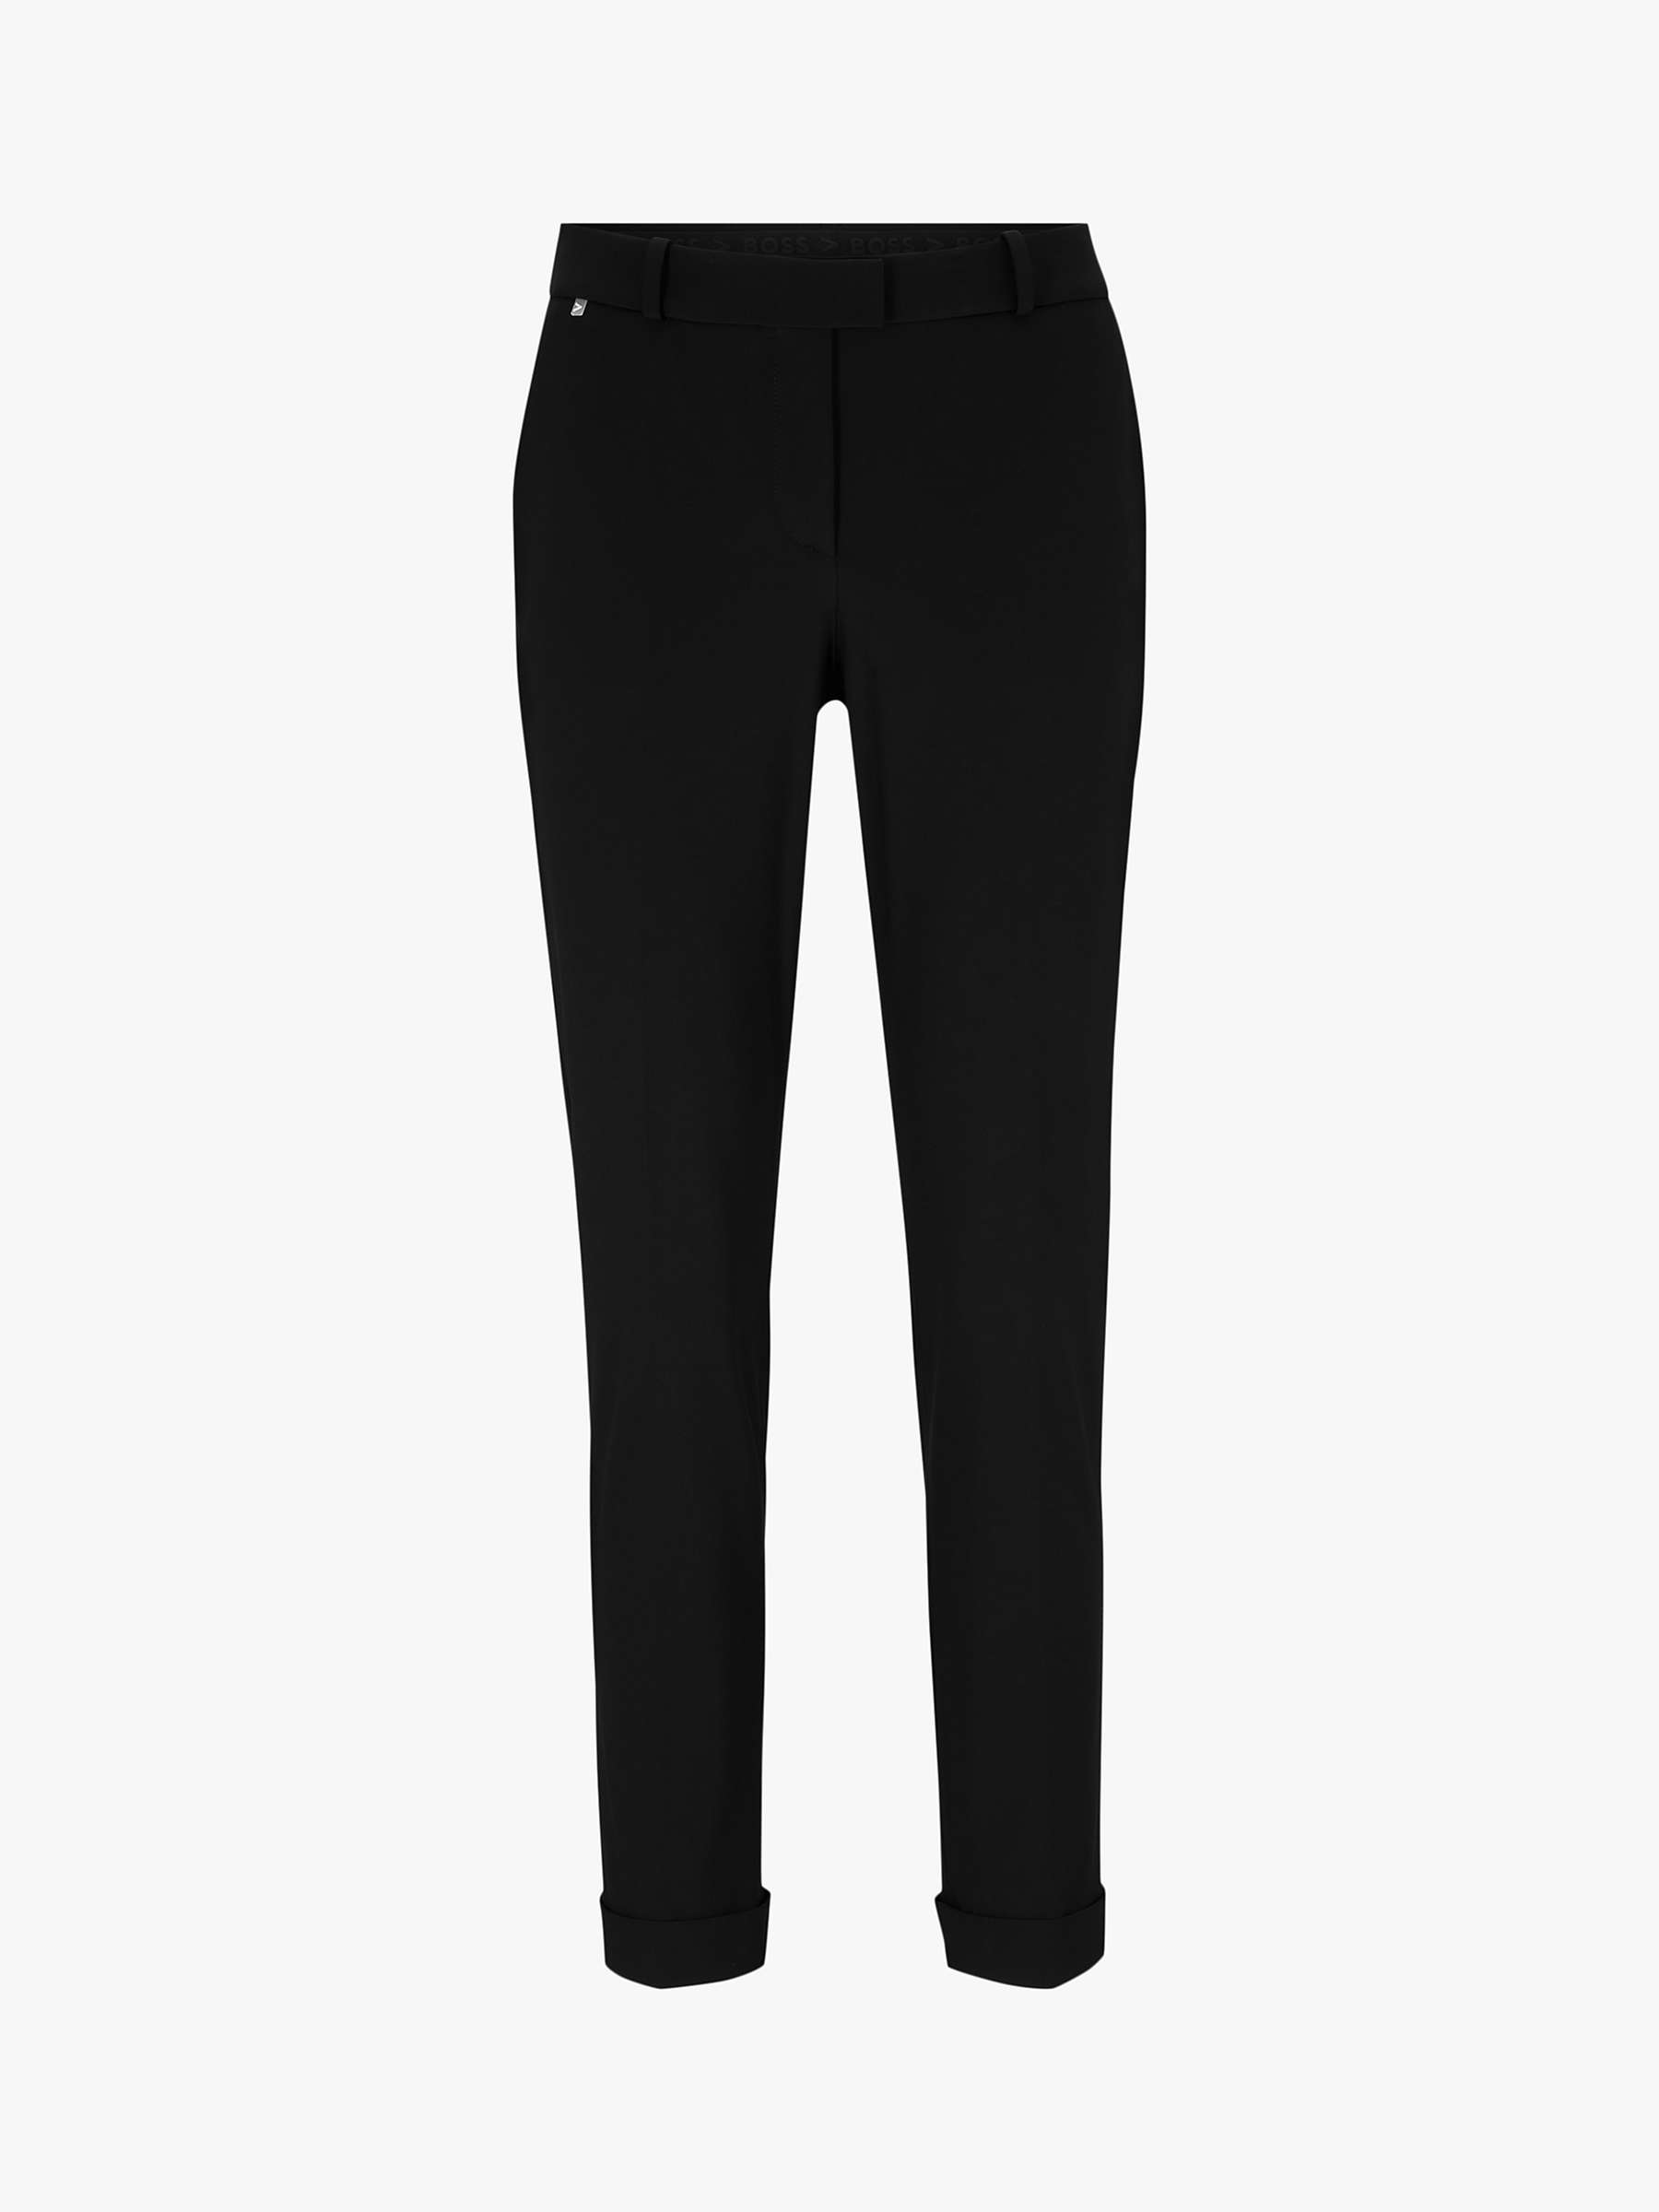 Buy HUGO BOSS Tobaluka Plain Tailored Trousers, Black Online at johnlewis.com